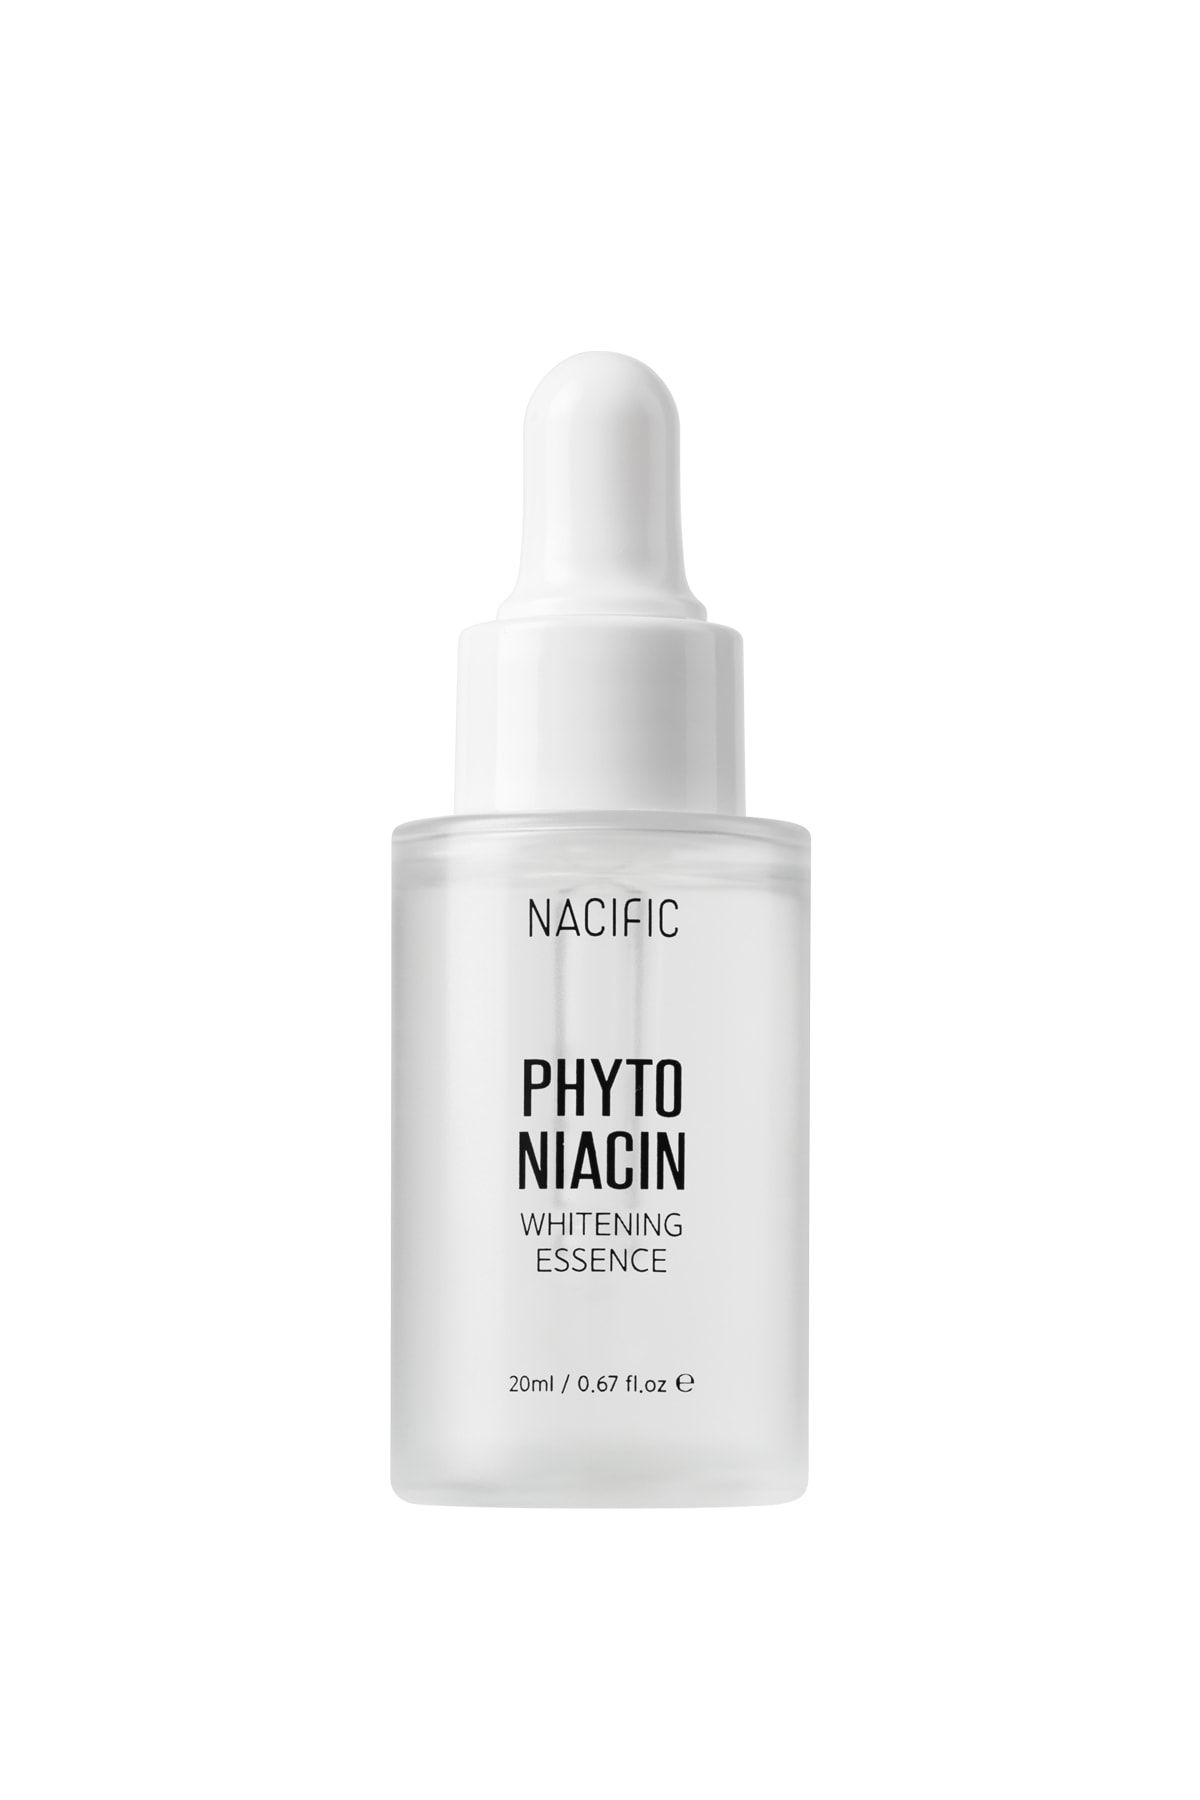 Nacific Phyto Niacin Brightening Essence 20ml - Cilt Beyazlatma Etkili Esans